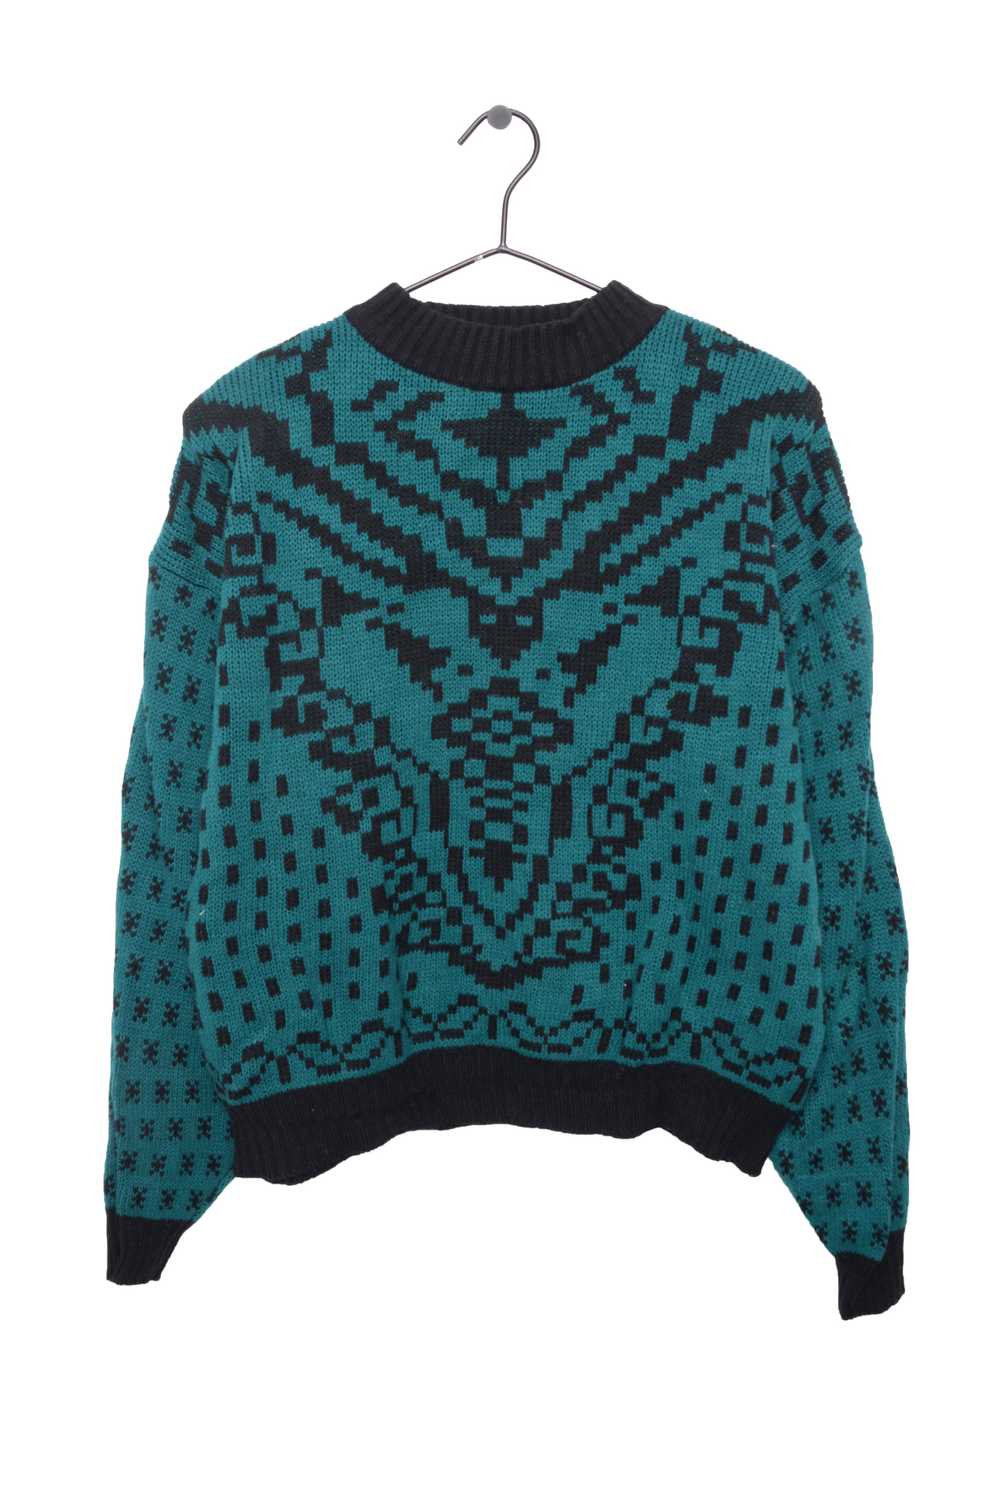 Geometric Flourish Sweater - image 1